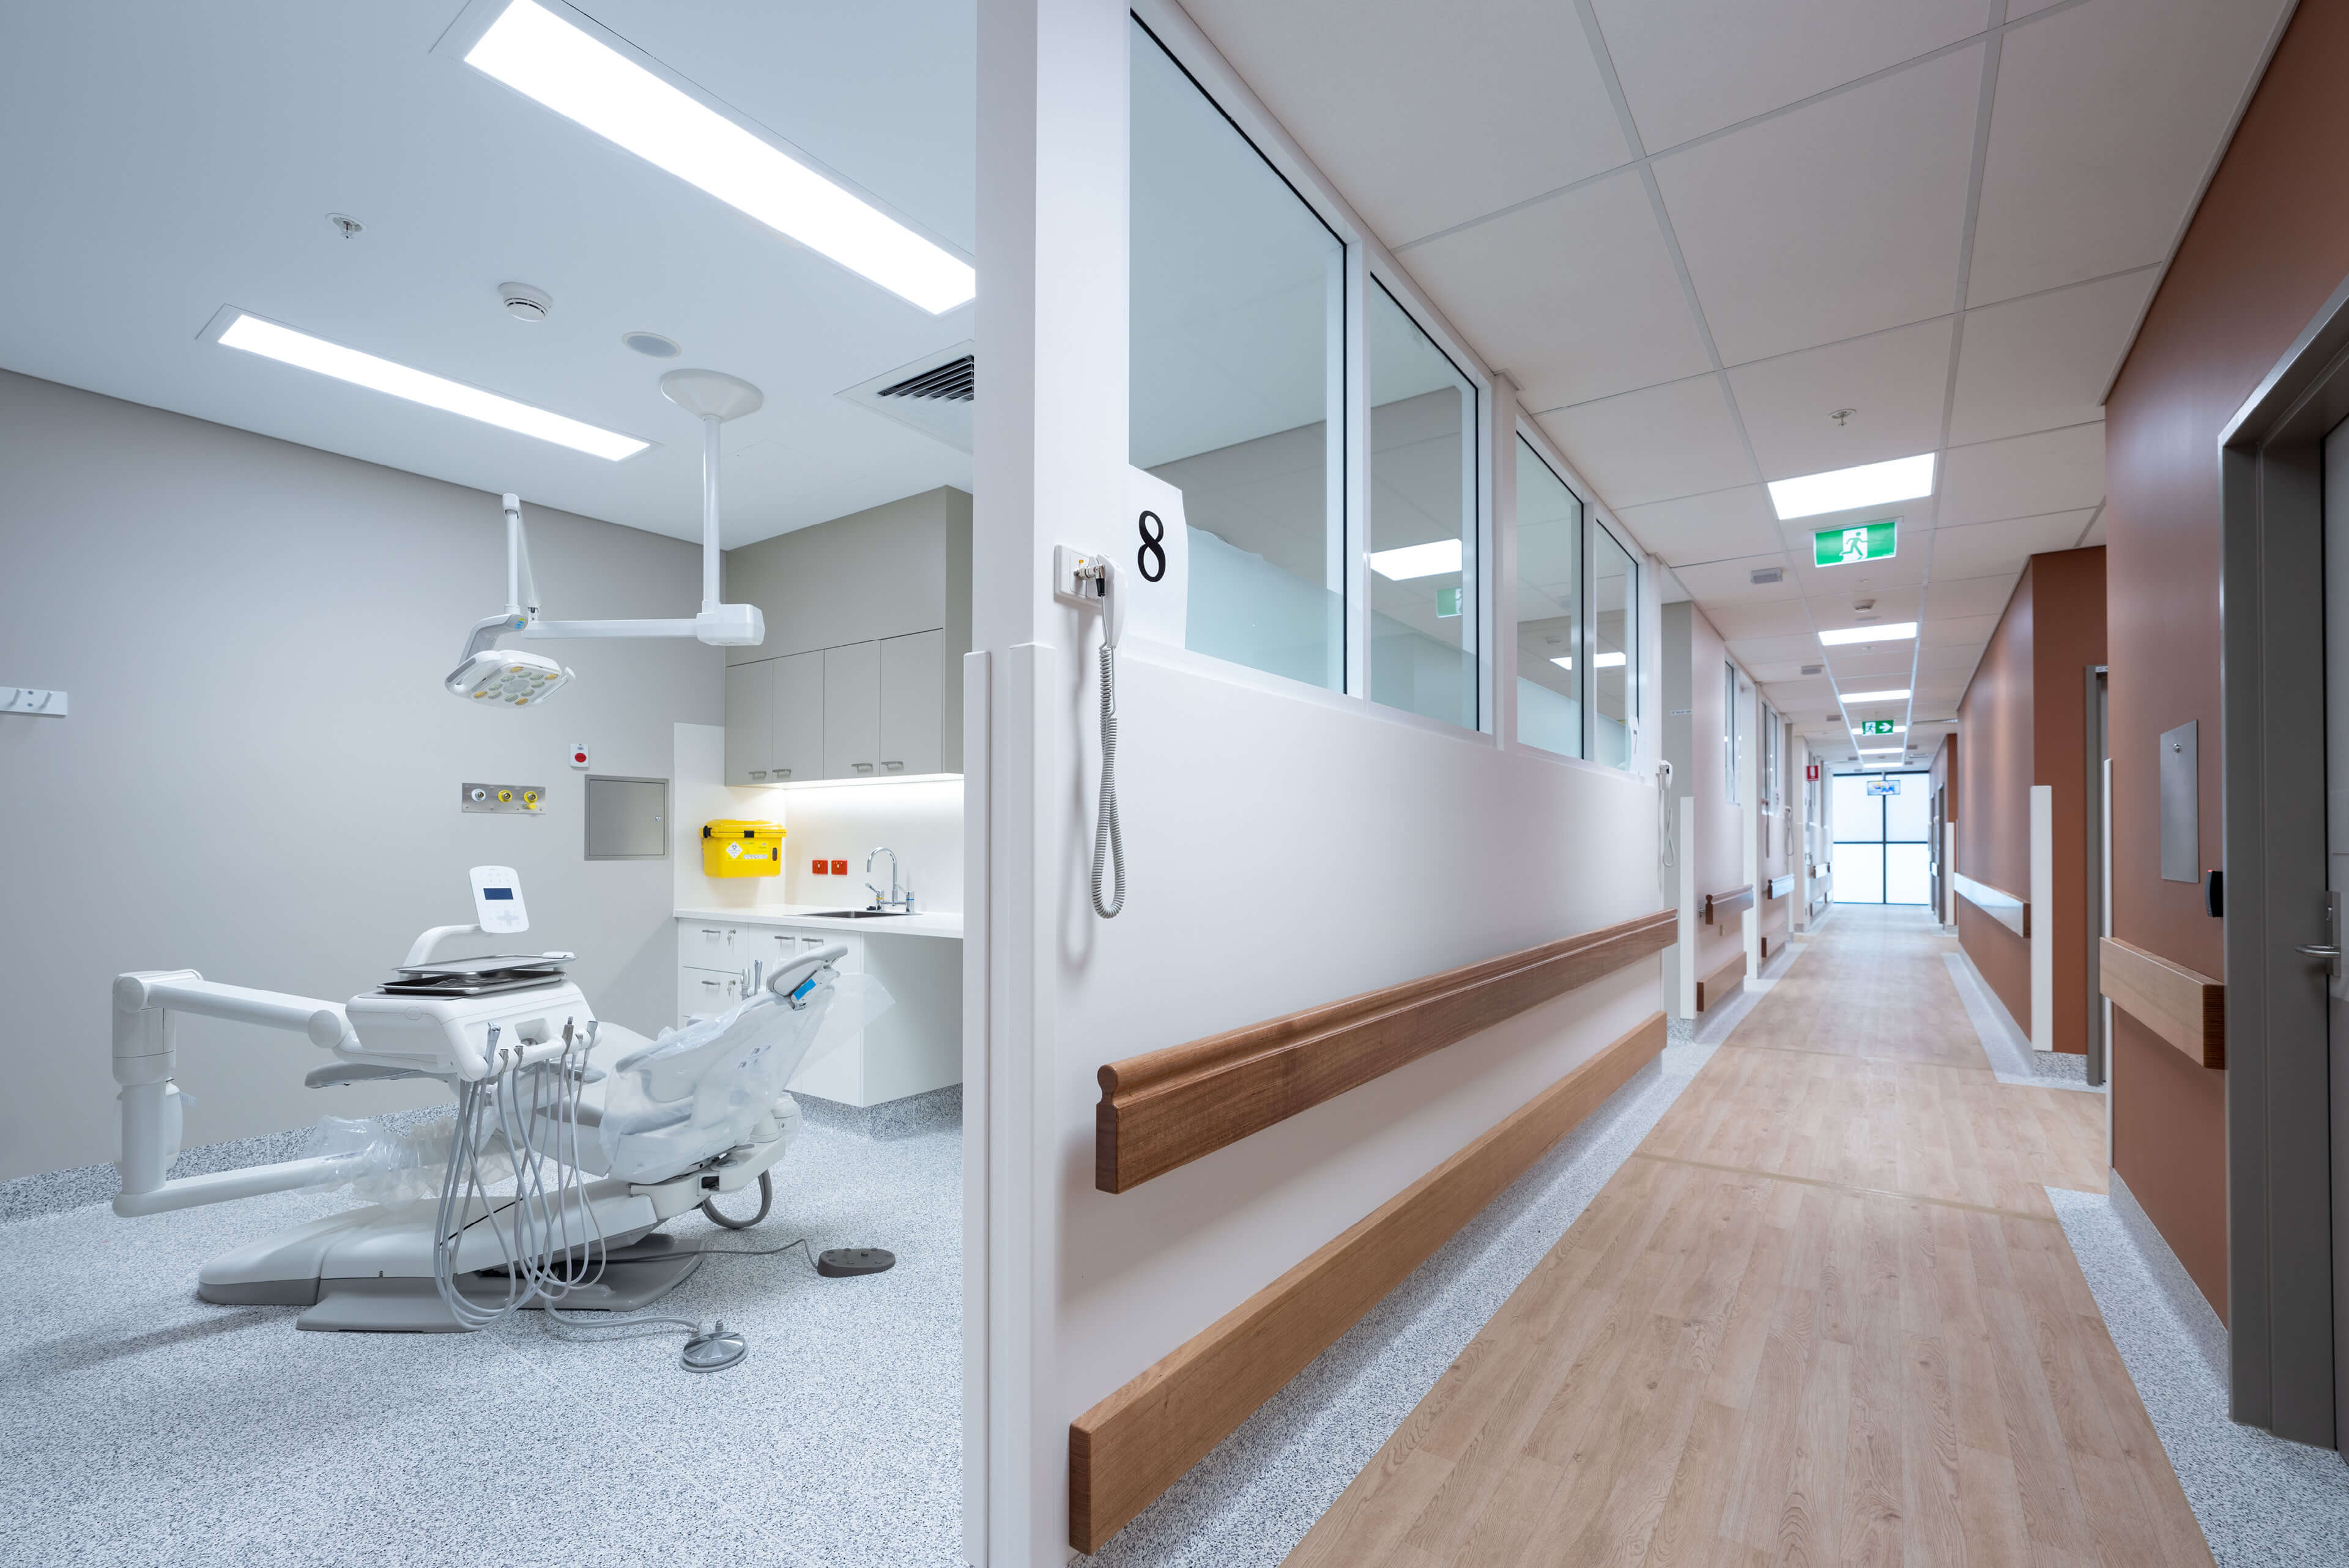 3 interior medical room campbelltown hospital refurbishment taylor construction refurbishment live environments